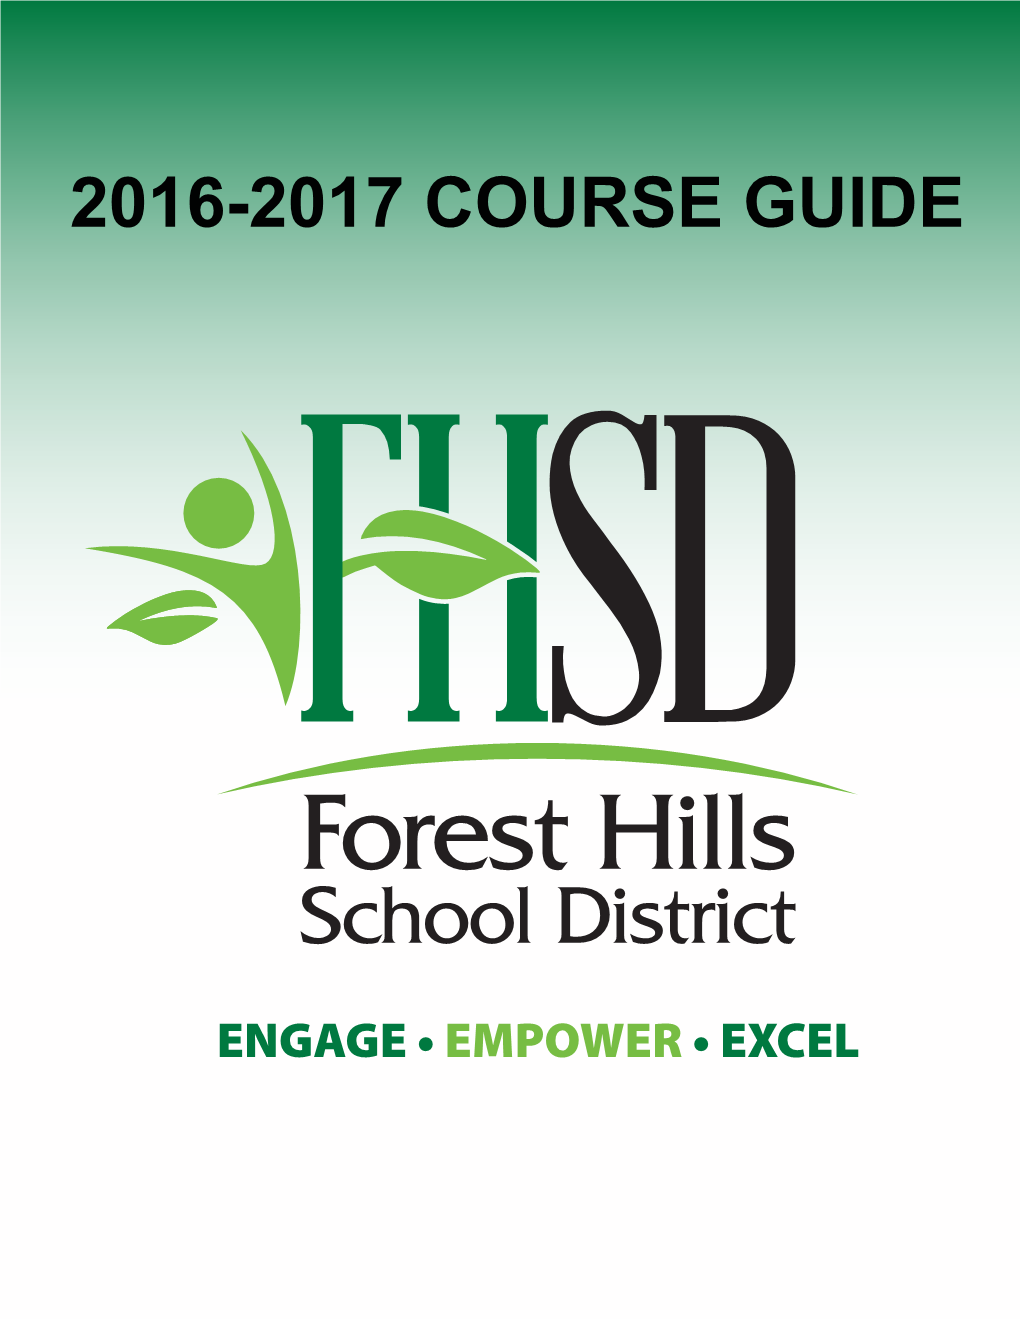 Fhsd-Course-Guide-16-17-FINAL.Pdf